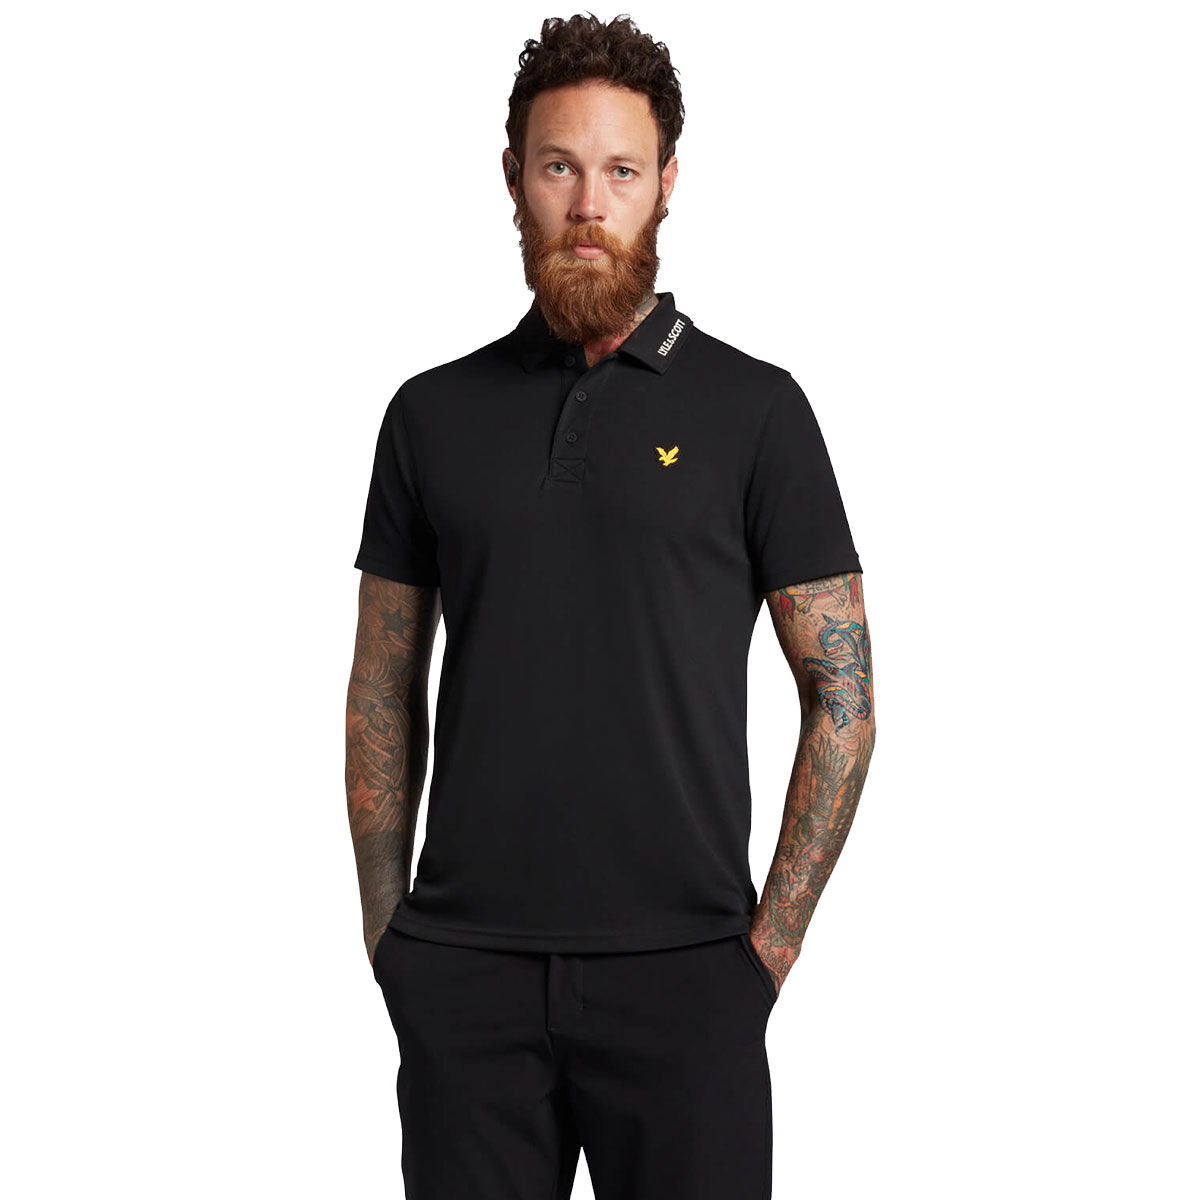 Lyle & Scott Jet Black Lightweight Collar Logo Technical Breathable Golf Polo Shirt, Size: Small | American Golf